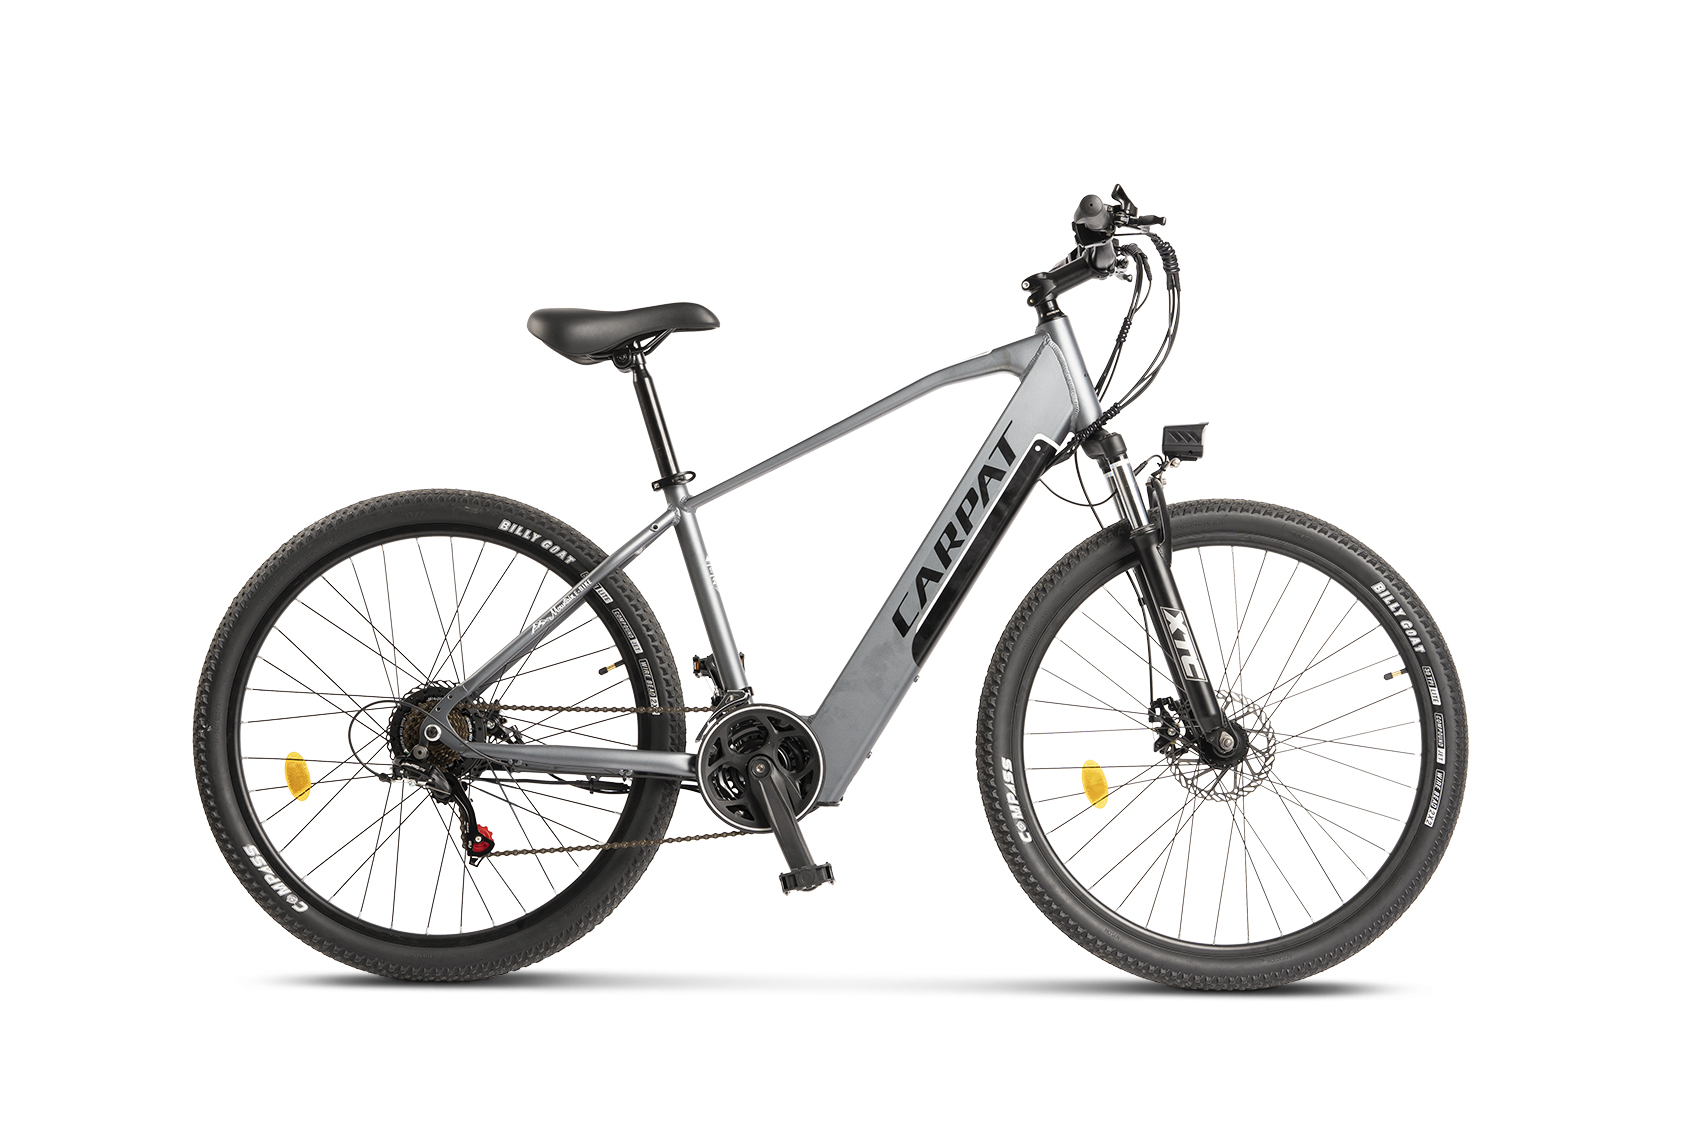 PROMO BICICLETE - Bicicleta Electrica MTB (E-Bike) CARPAT C275M7E 27.5", Gri, https:carpatsport.ro